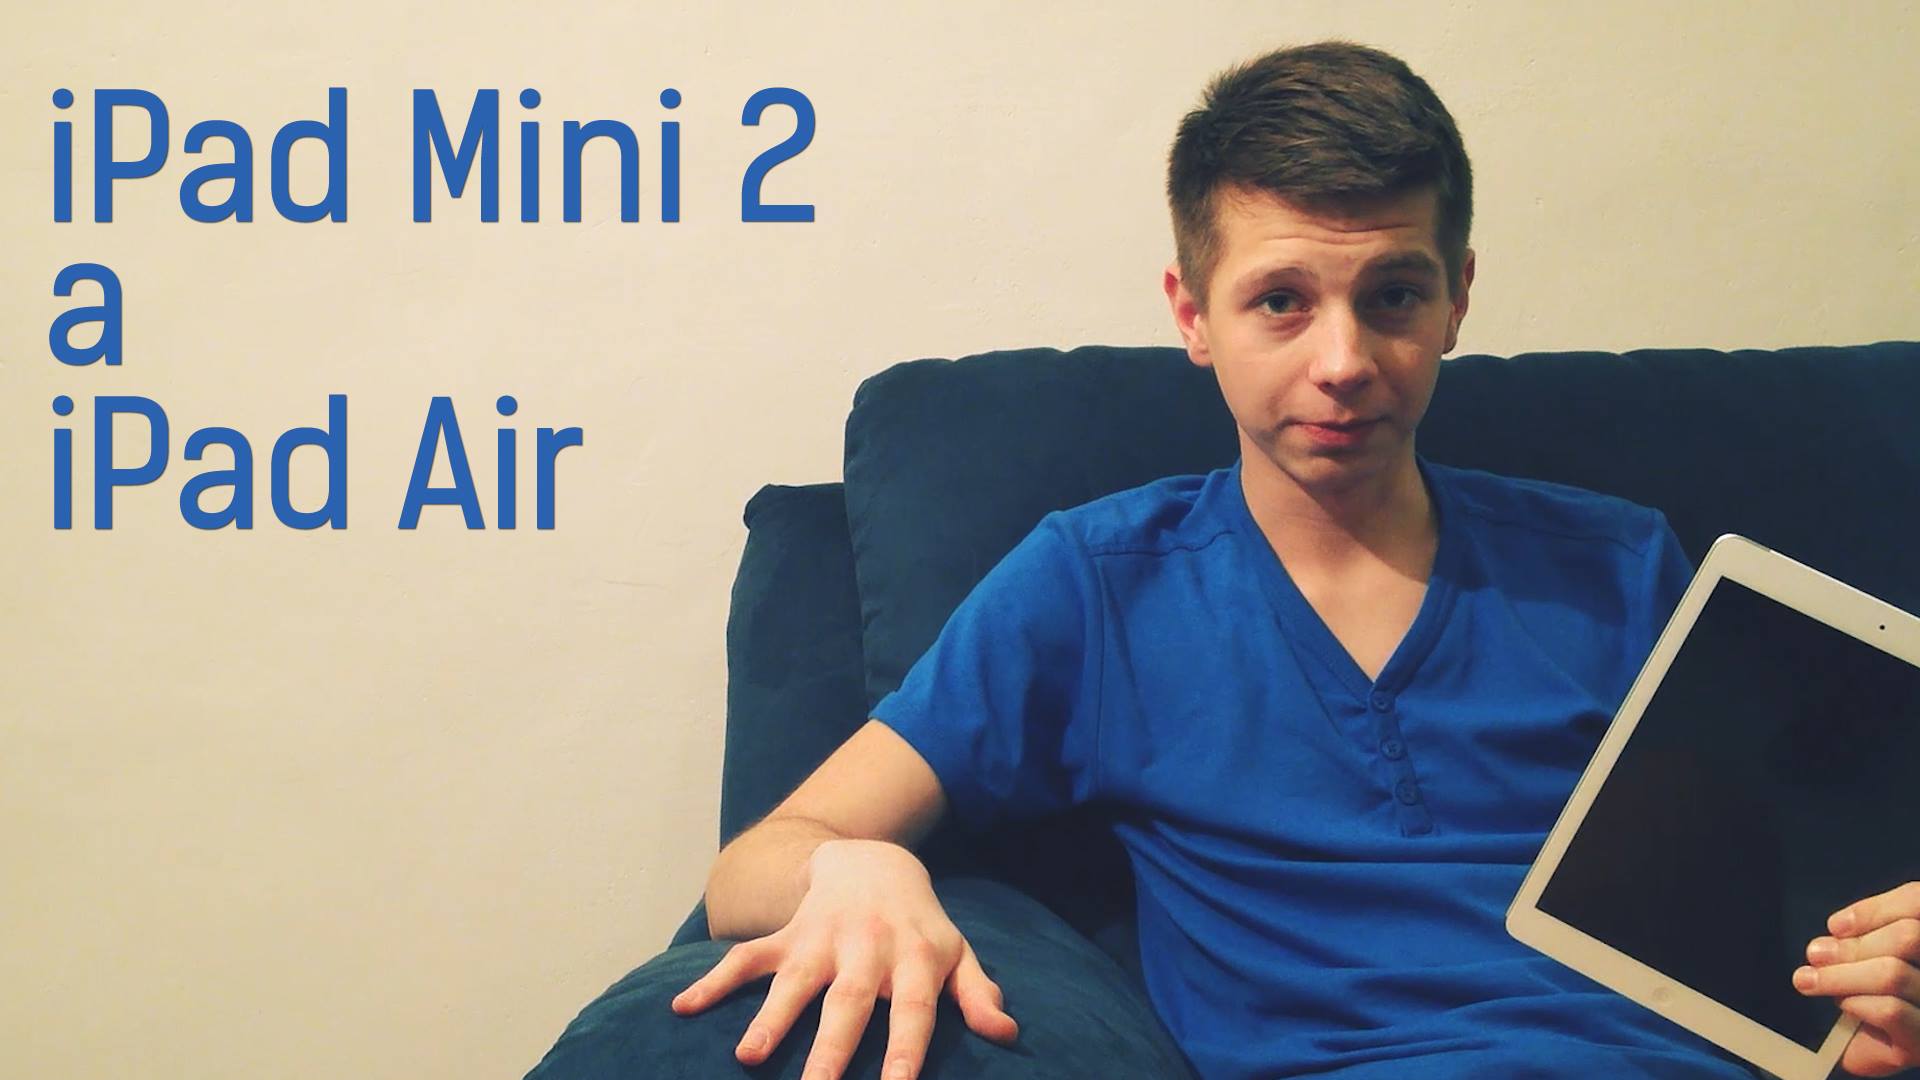 20 zajímavostí: iPad Air a iPad Mini 2 [VIDEO]